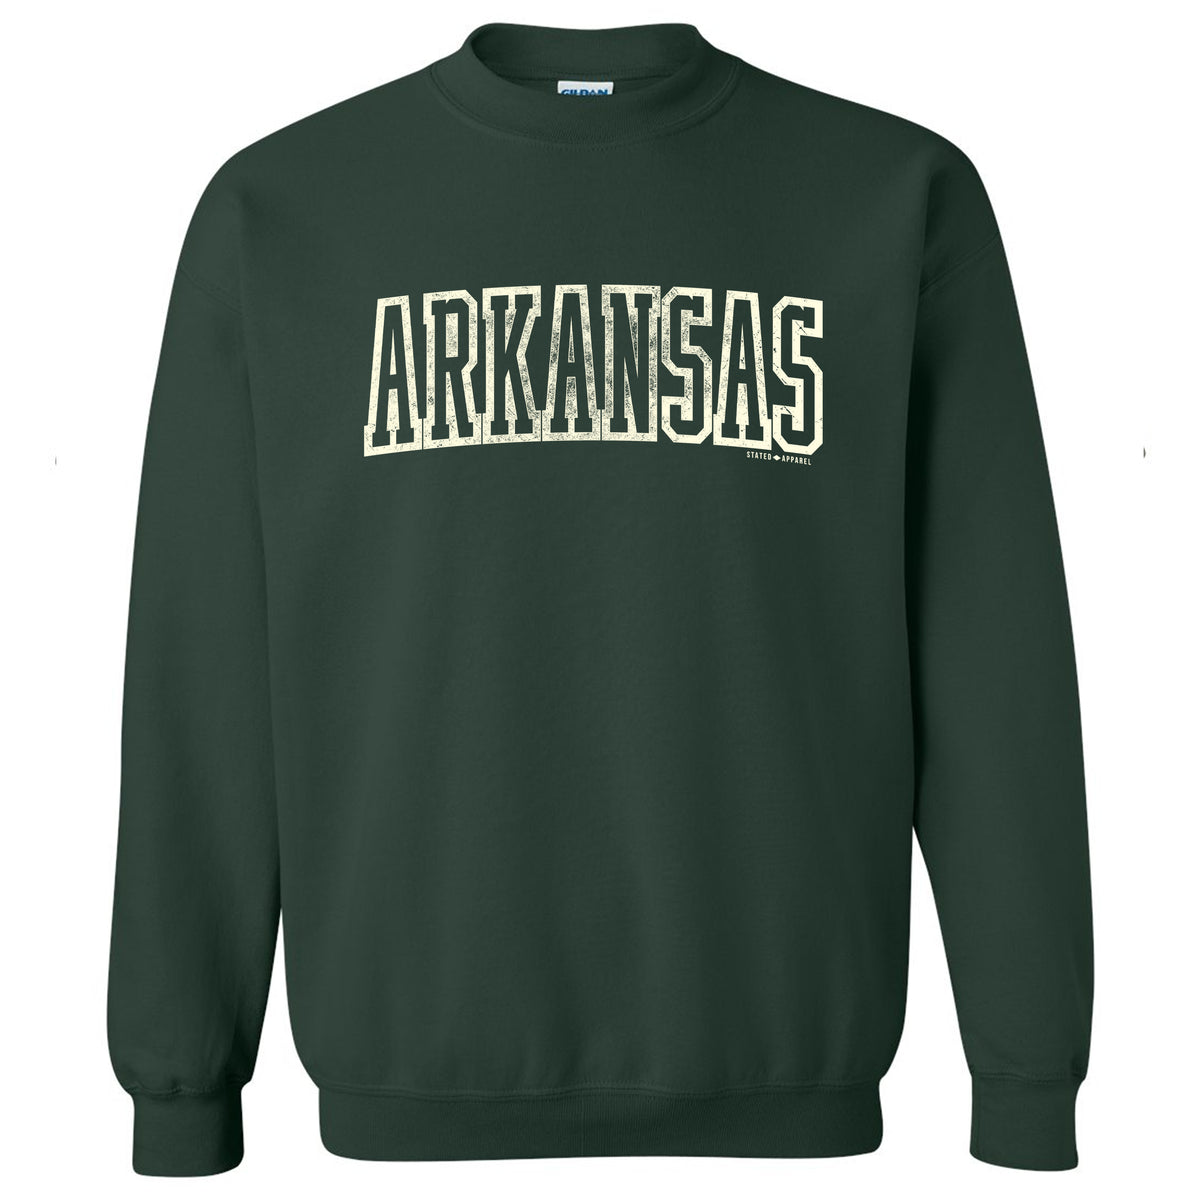 Arkansas Arch Outline Sweatshirt